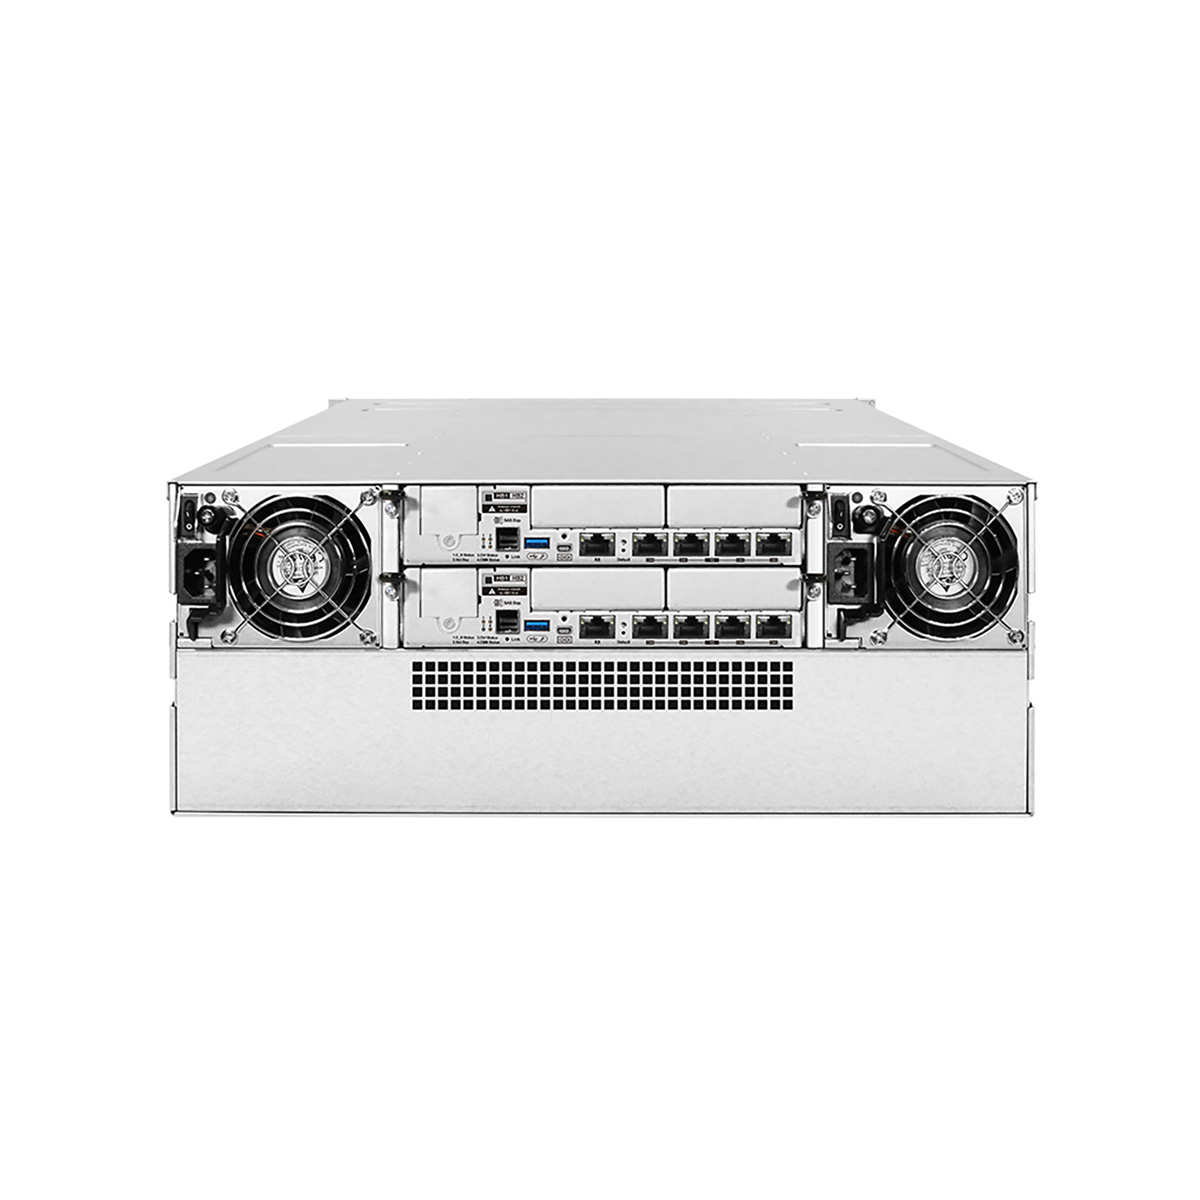 EonStor GS 2000 4U/ 24bay, dual redundant co ntroller subsystem including 2x12Gb/ s SAS EXP. ports, 8x1G iSCSI ports +4x host board slot(s), 4x4GB, 2x(PSU+FAN Module), 2x(SuperCa p.+Flash module), 24xdrive trays and 1xRackmount kit (GS2024R0C0F0D-8U32)